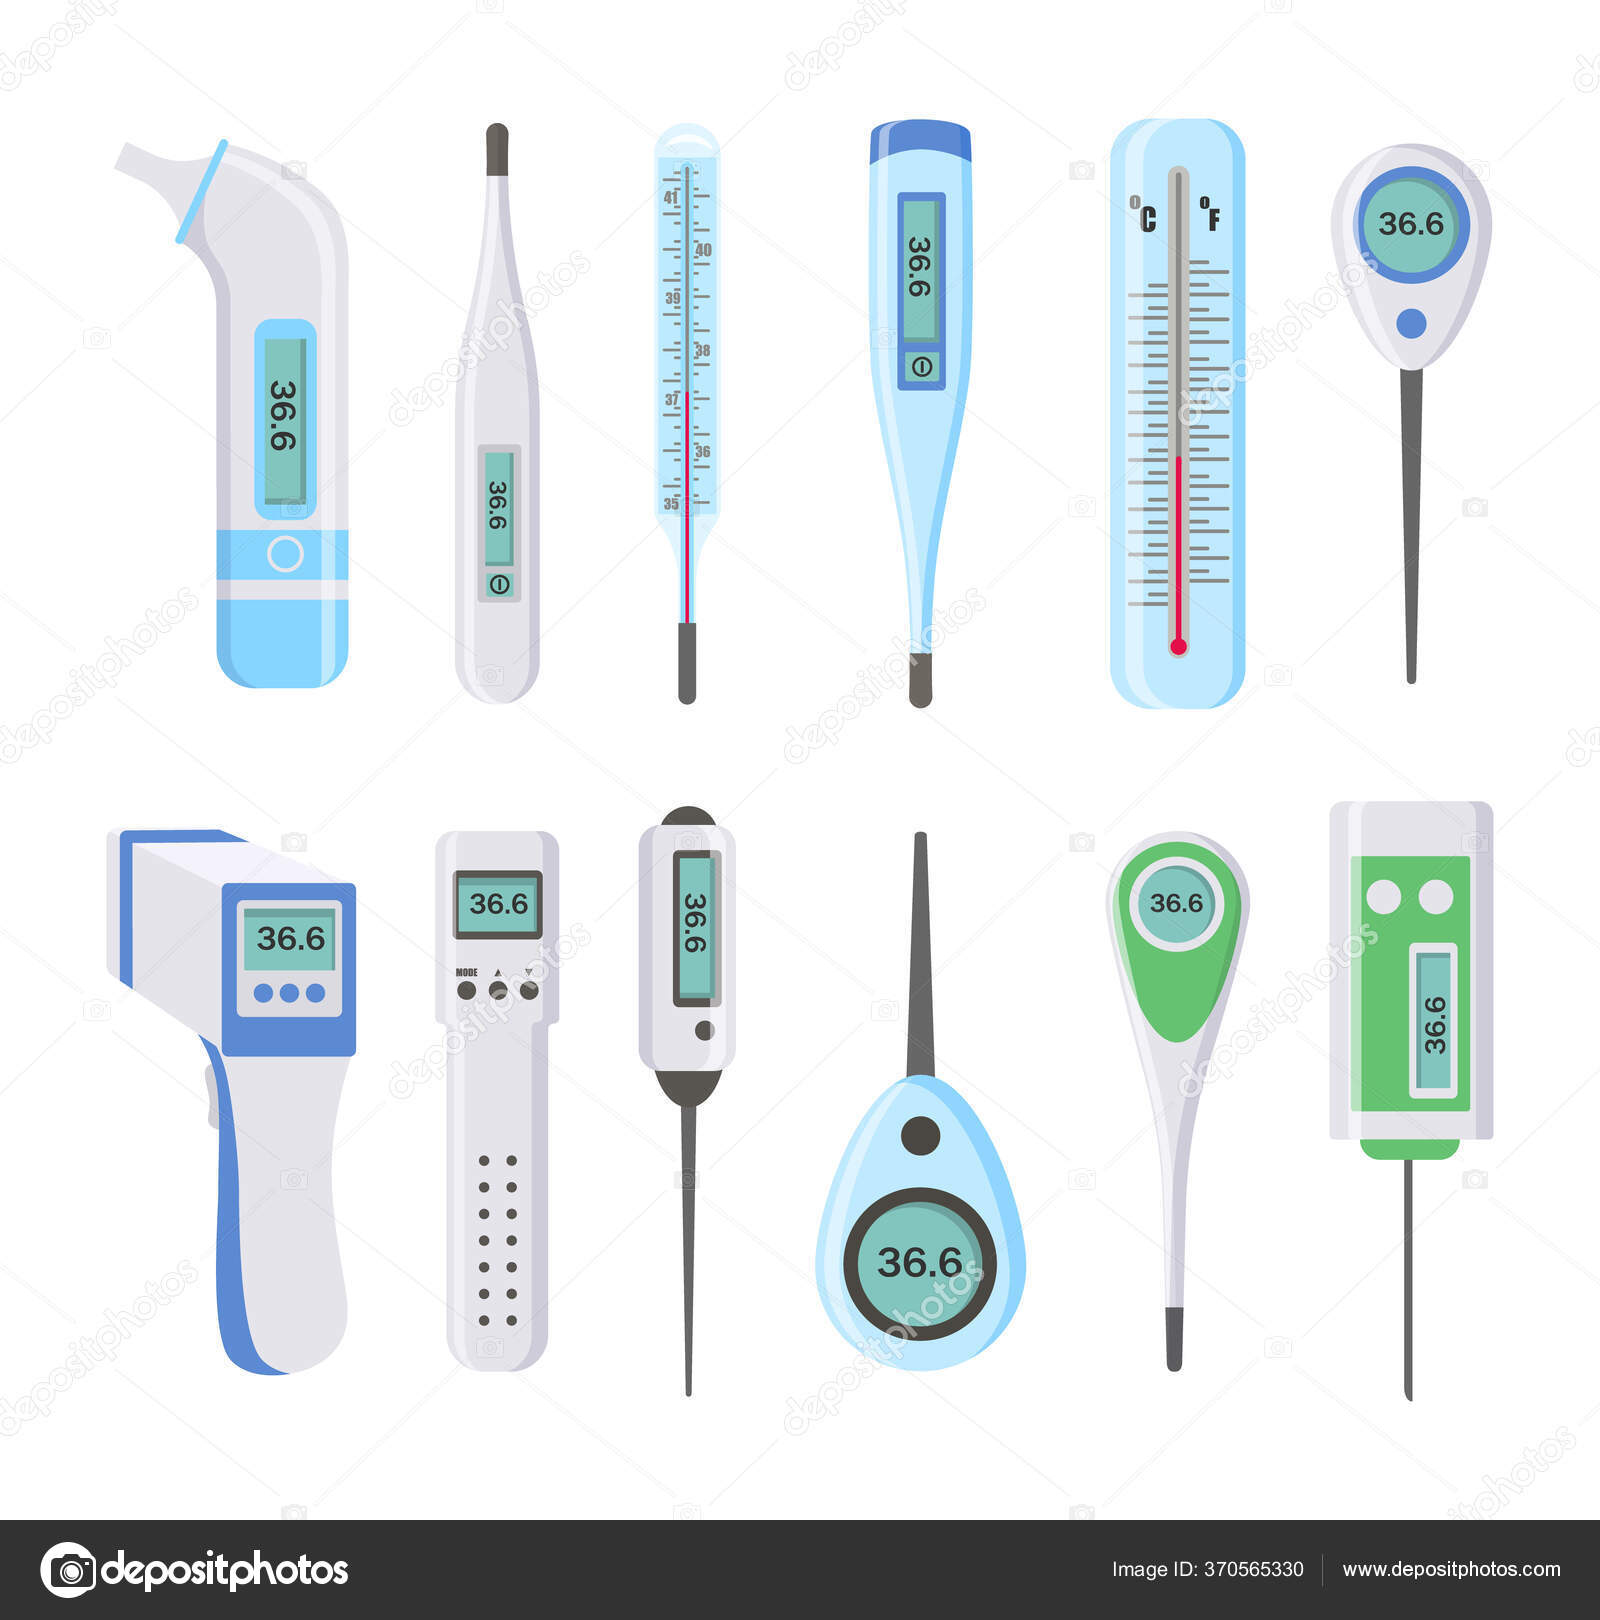 Digital Kitchen Thermometer Stock Illustration - Download Image